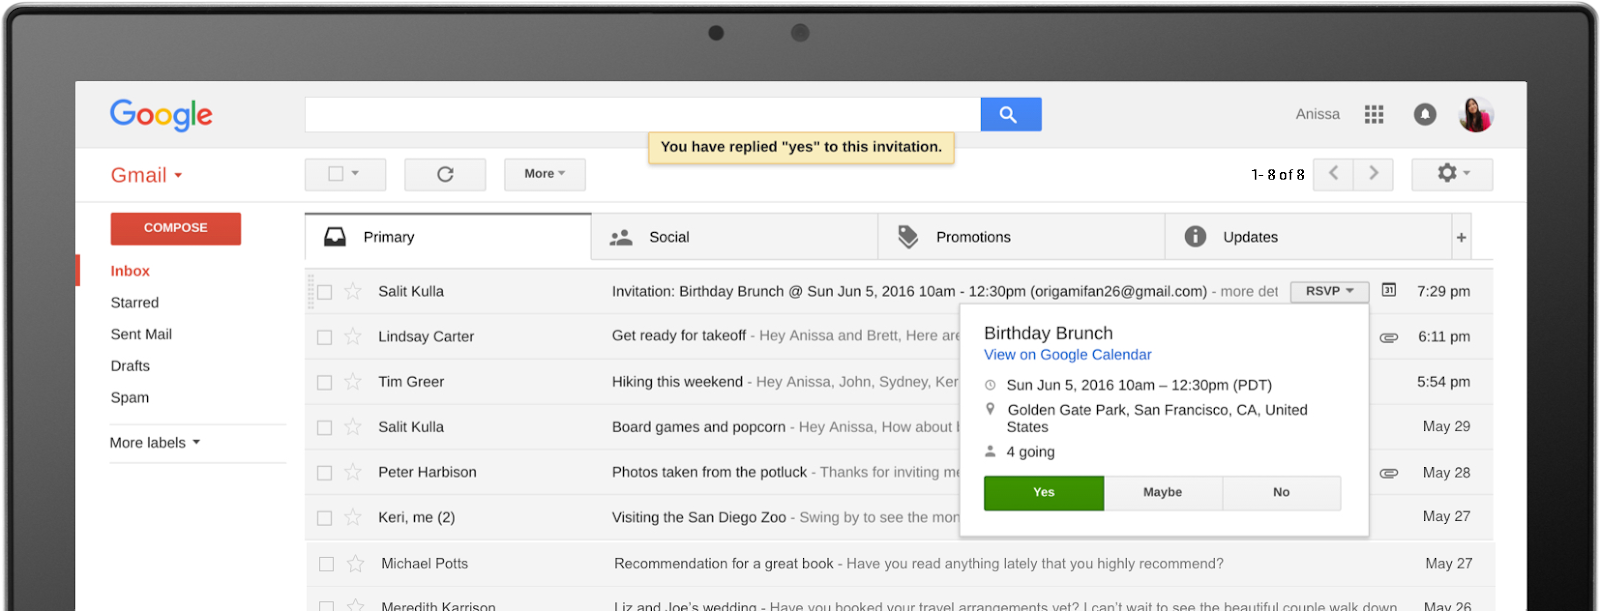 J mail. Google почта. Гмайл почта. Gmail картинка. Почтовый сервис gmail.